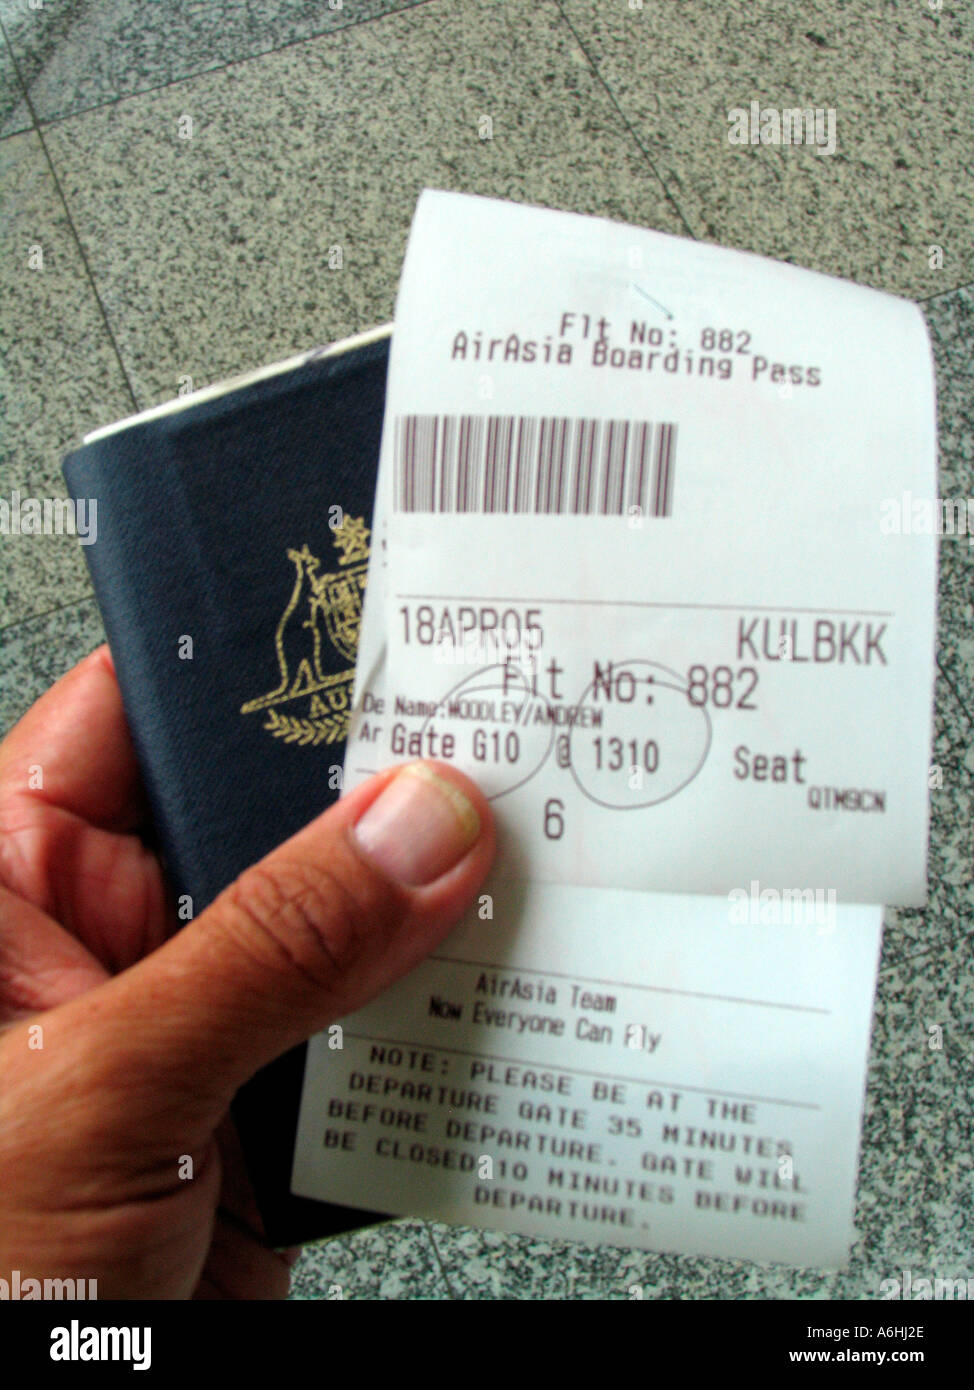 Air asia flight ticket